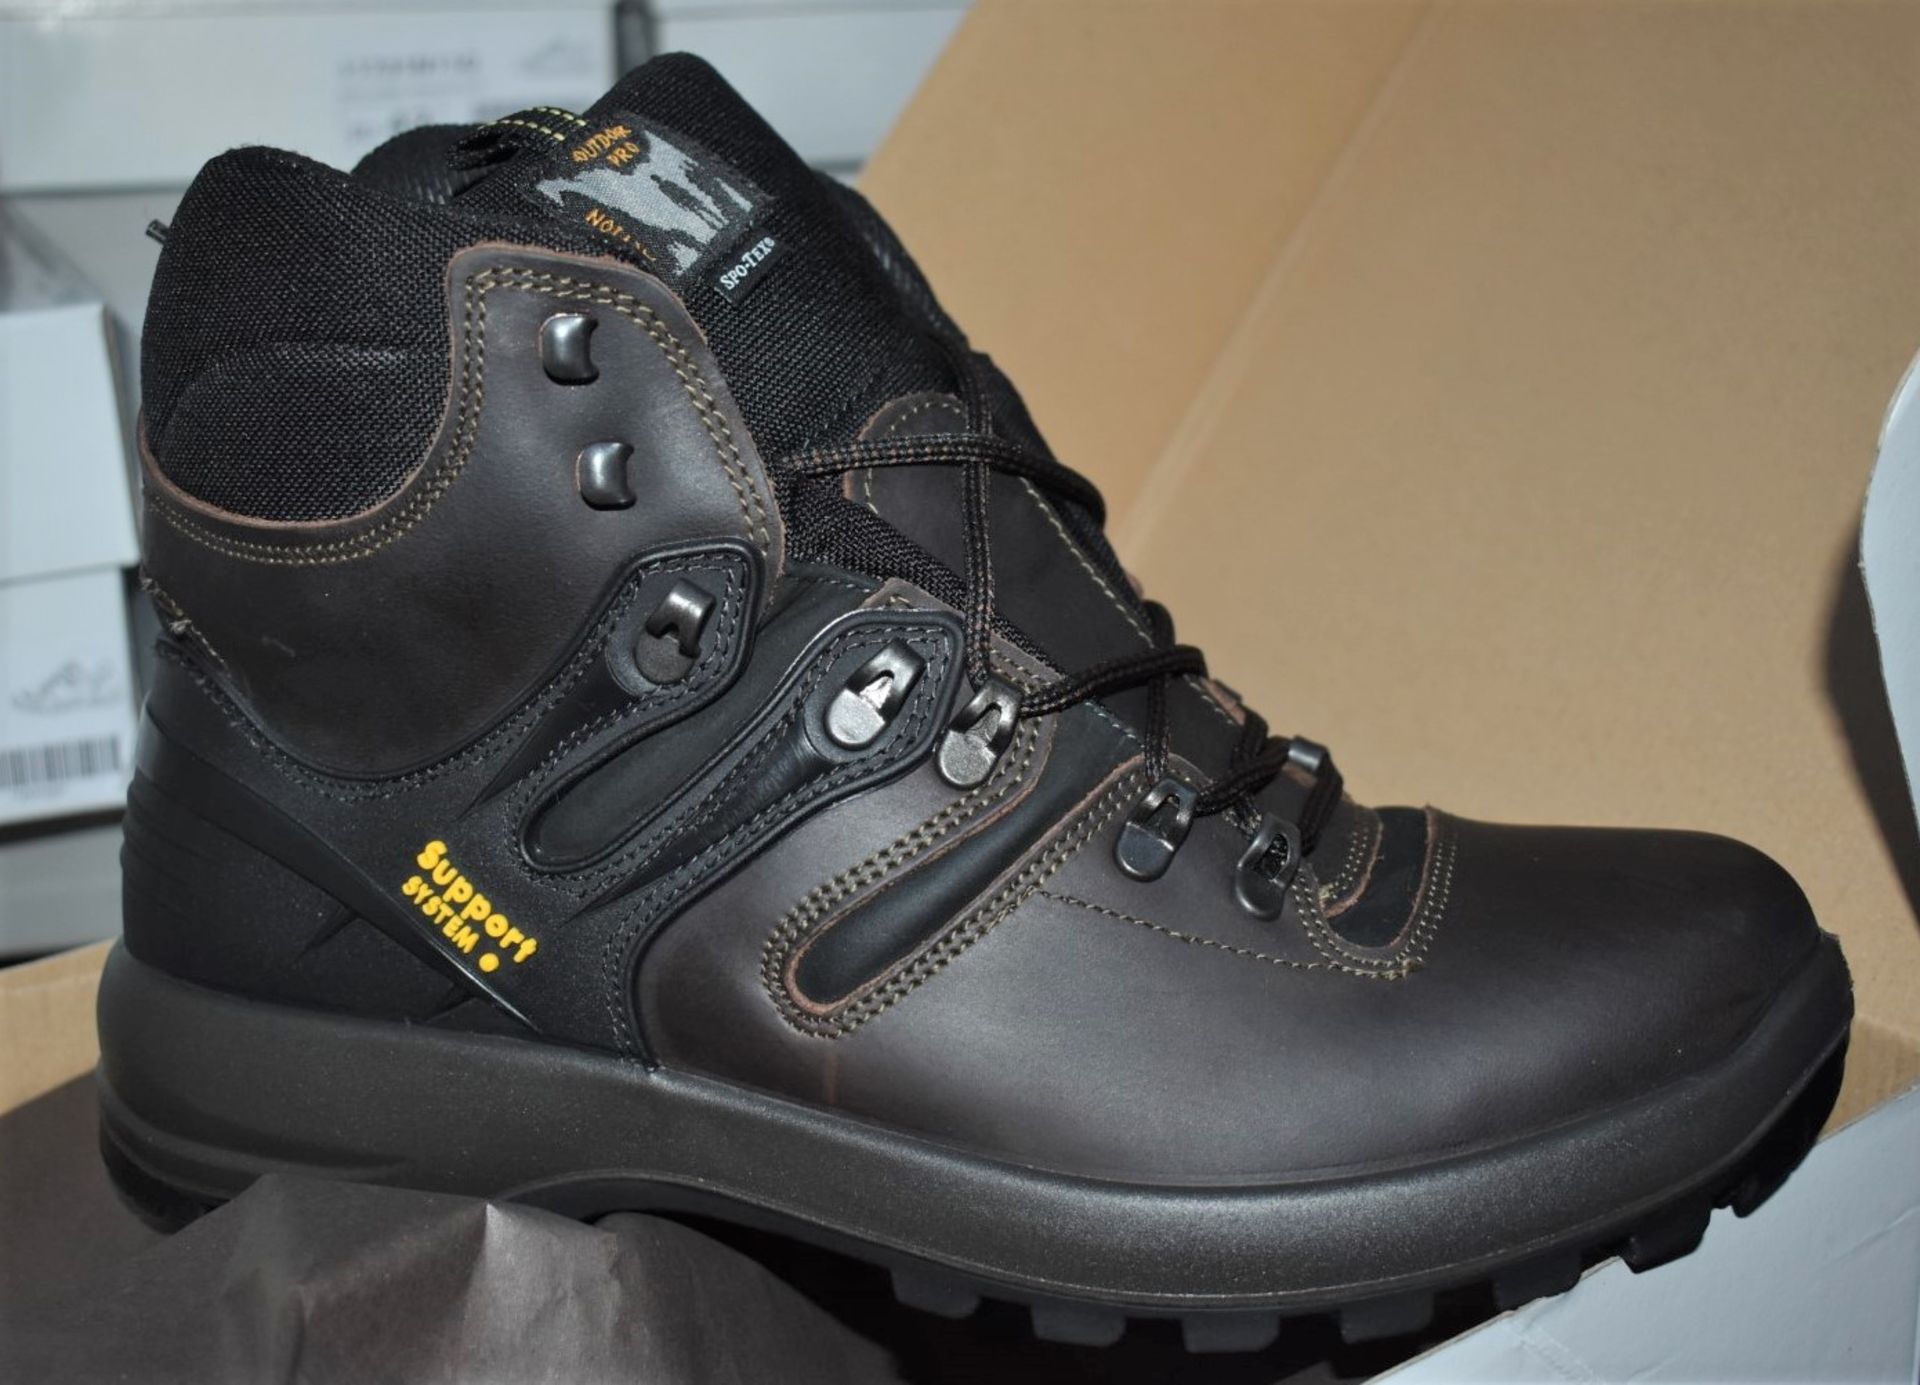 1 x Pair of Mens VIBRAM Walking Boots - Outdoor Pro Spo-Tex Trekking ...